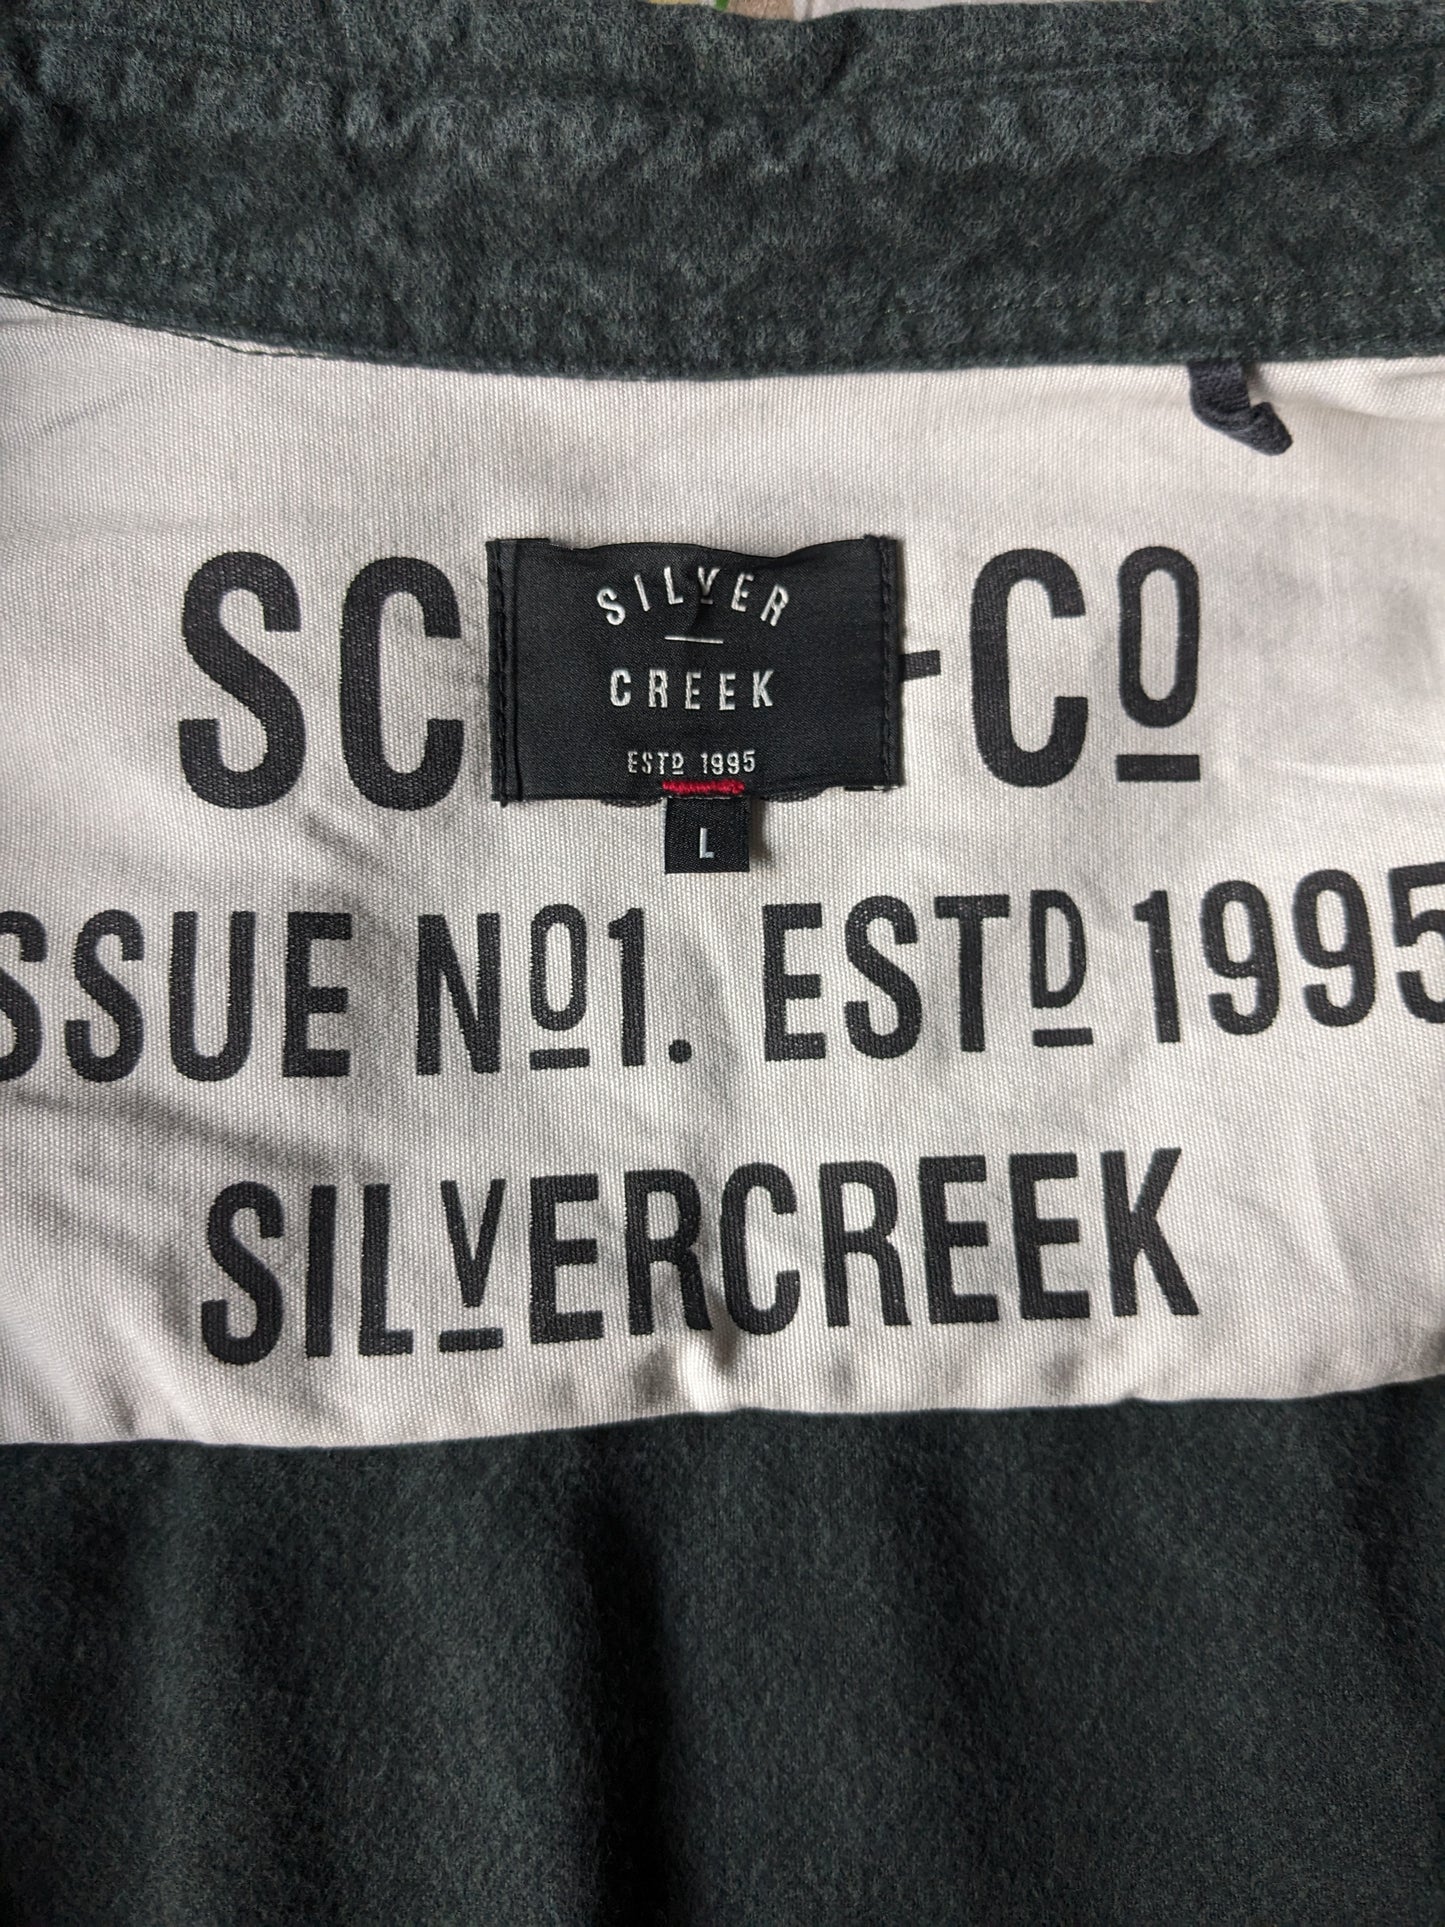 Silvercreek Shirt. Dunkelgrüner, etwas dickerer Stoff. Größe L.